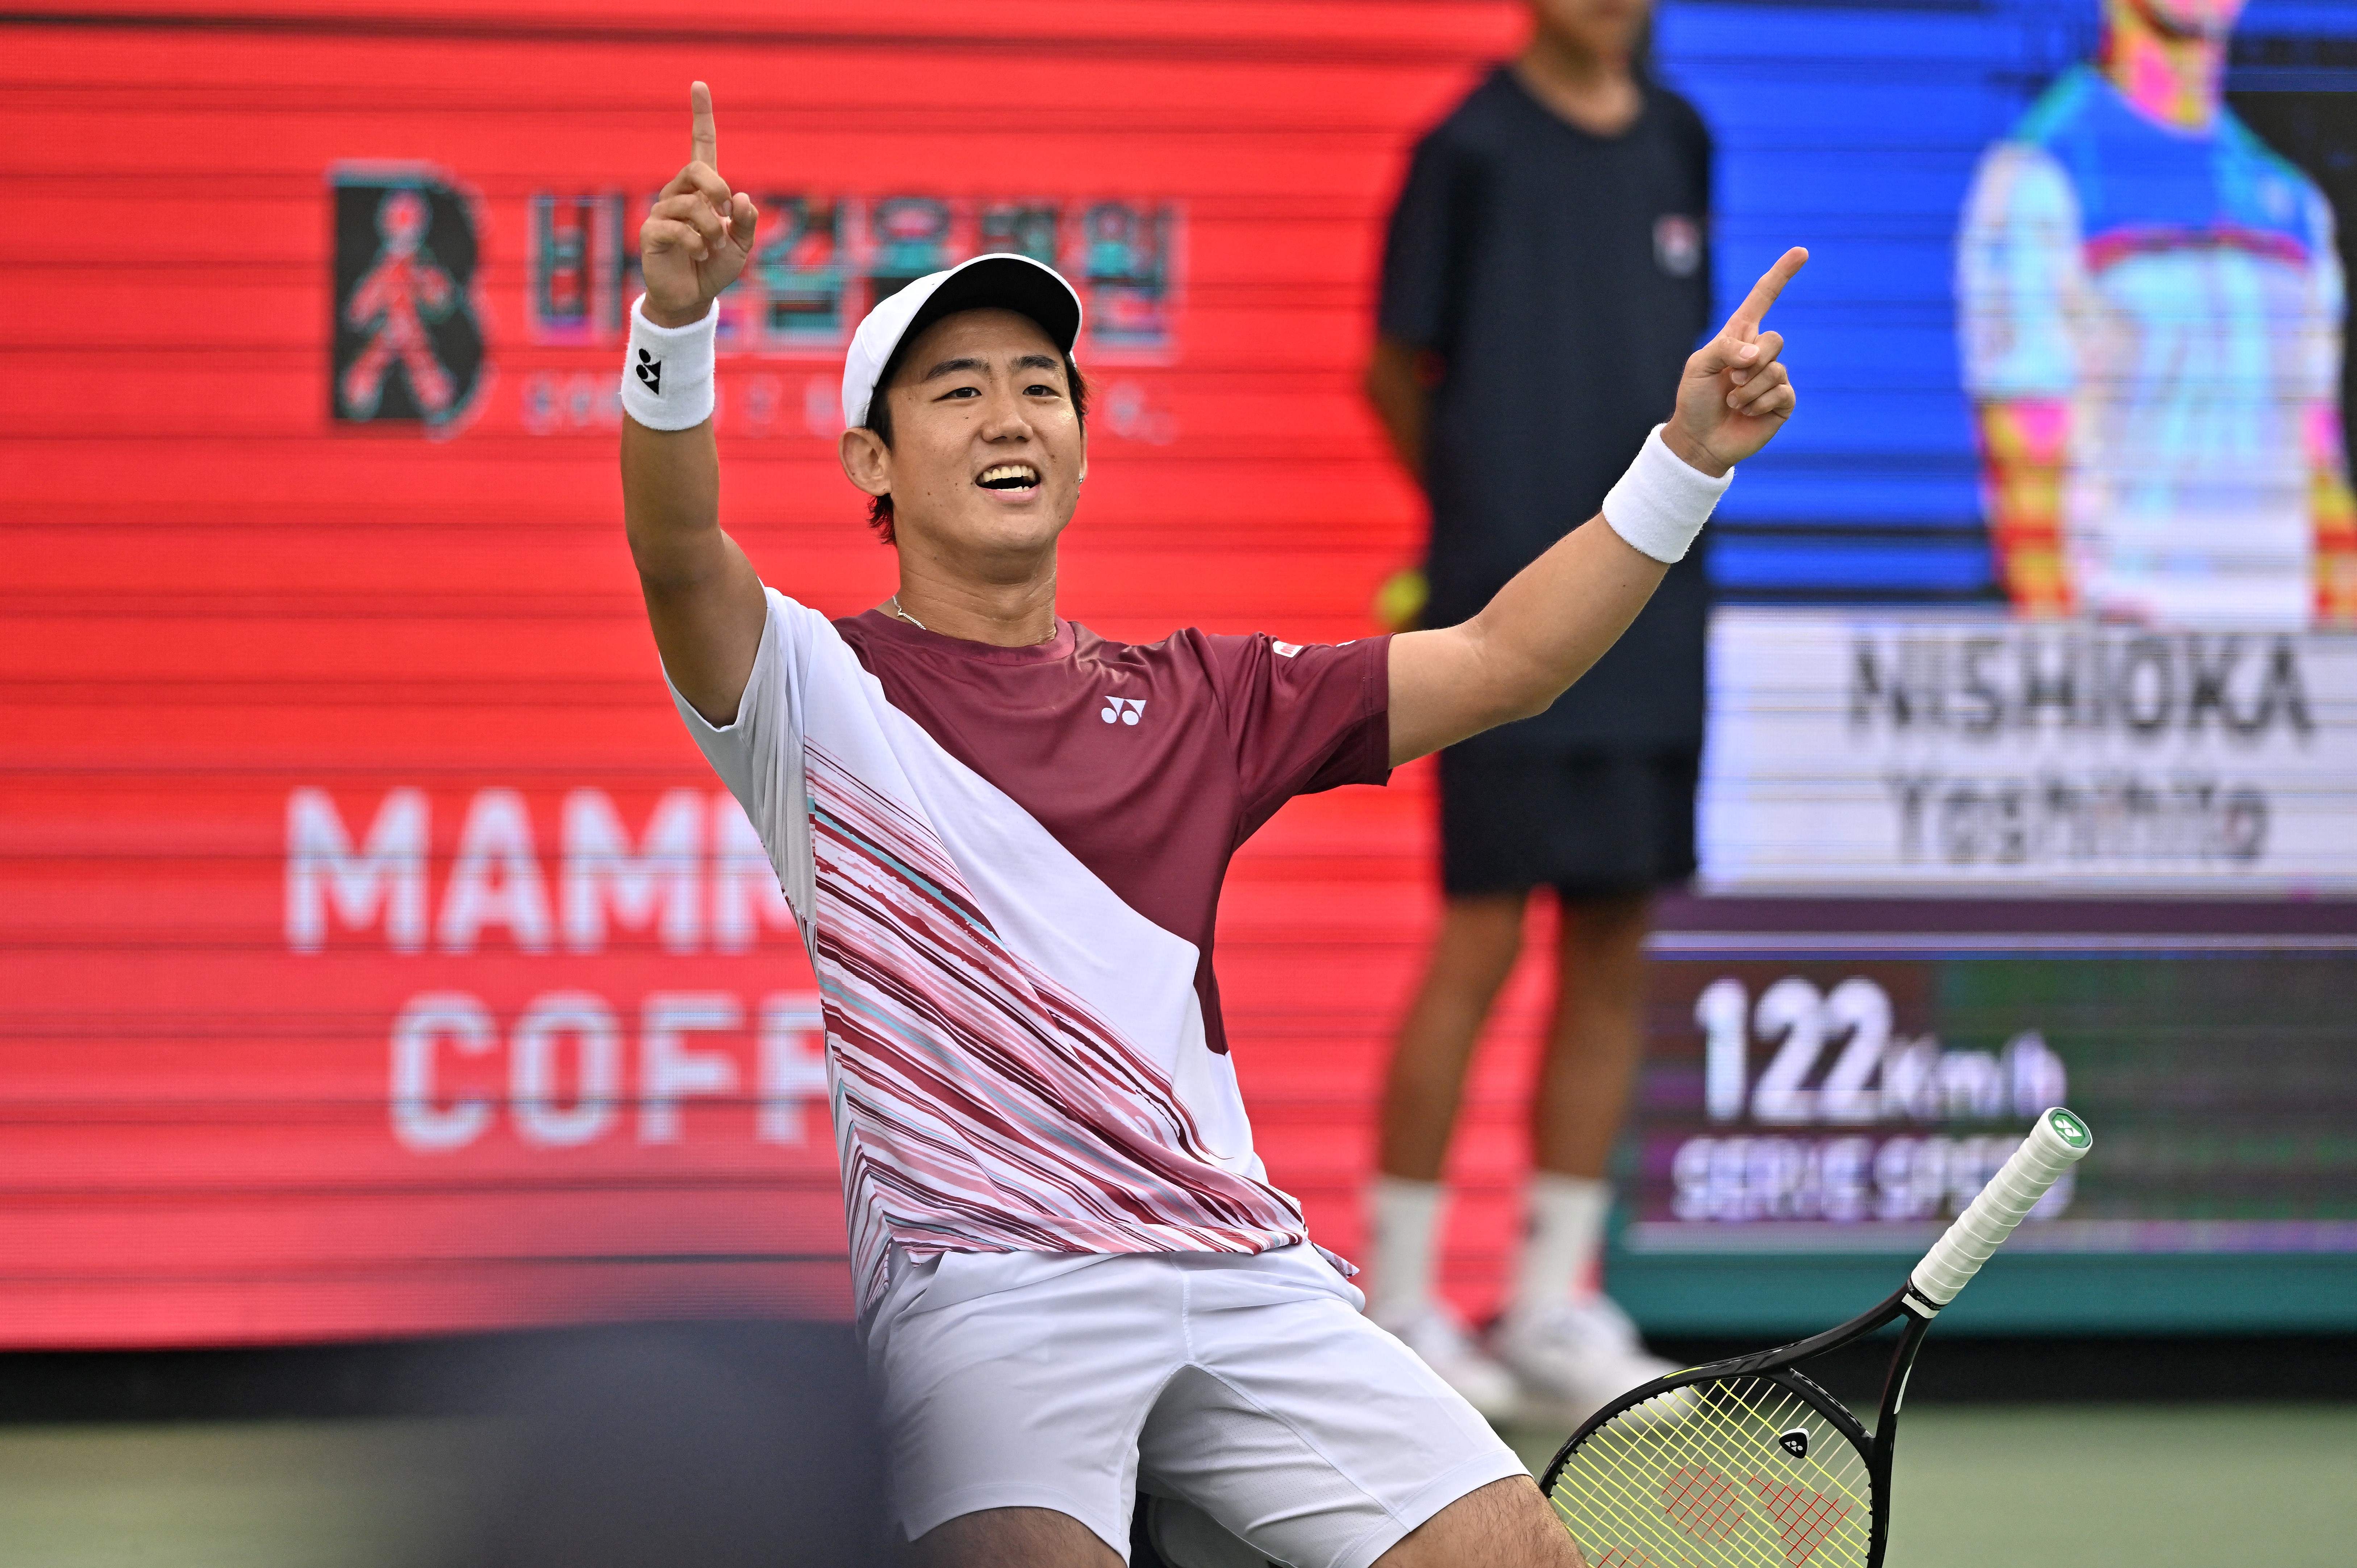 A confident Yoshihito Nishioka wins second career title